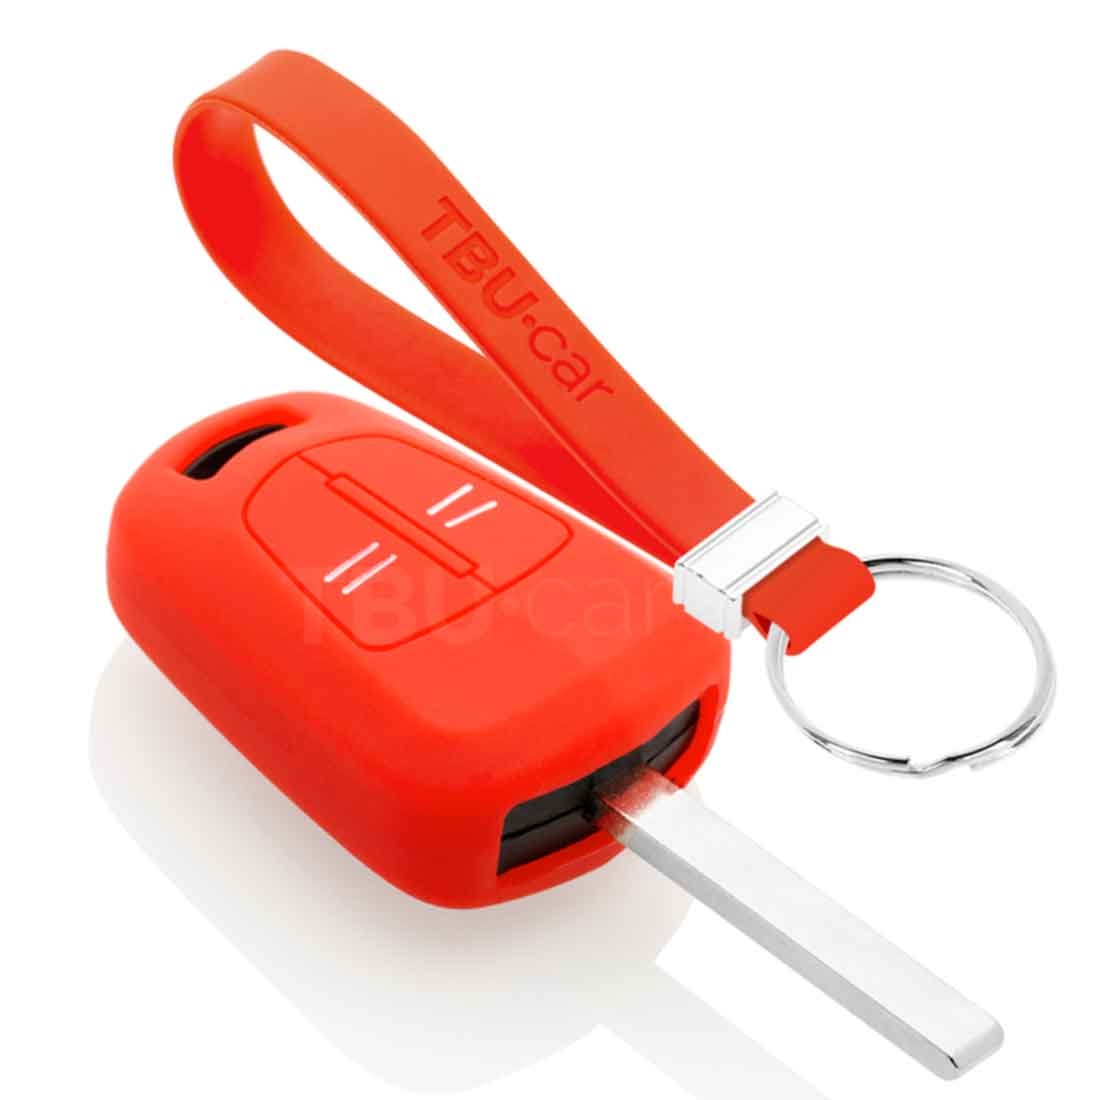 TBU car TBU car Autoschlüssel Hülle kompatibel mit Opel 2 Tasten - Schutzhülle aus Silikon - Auto Schlüsselhülle Cover in Rot